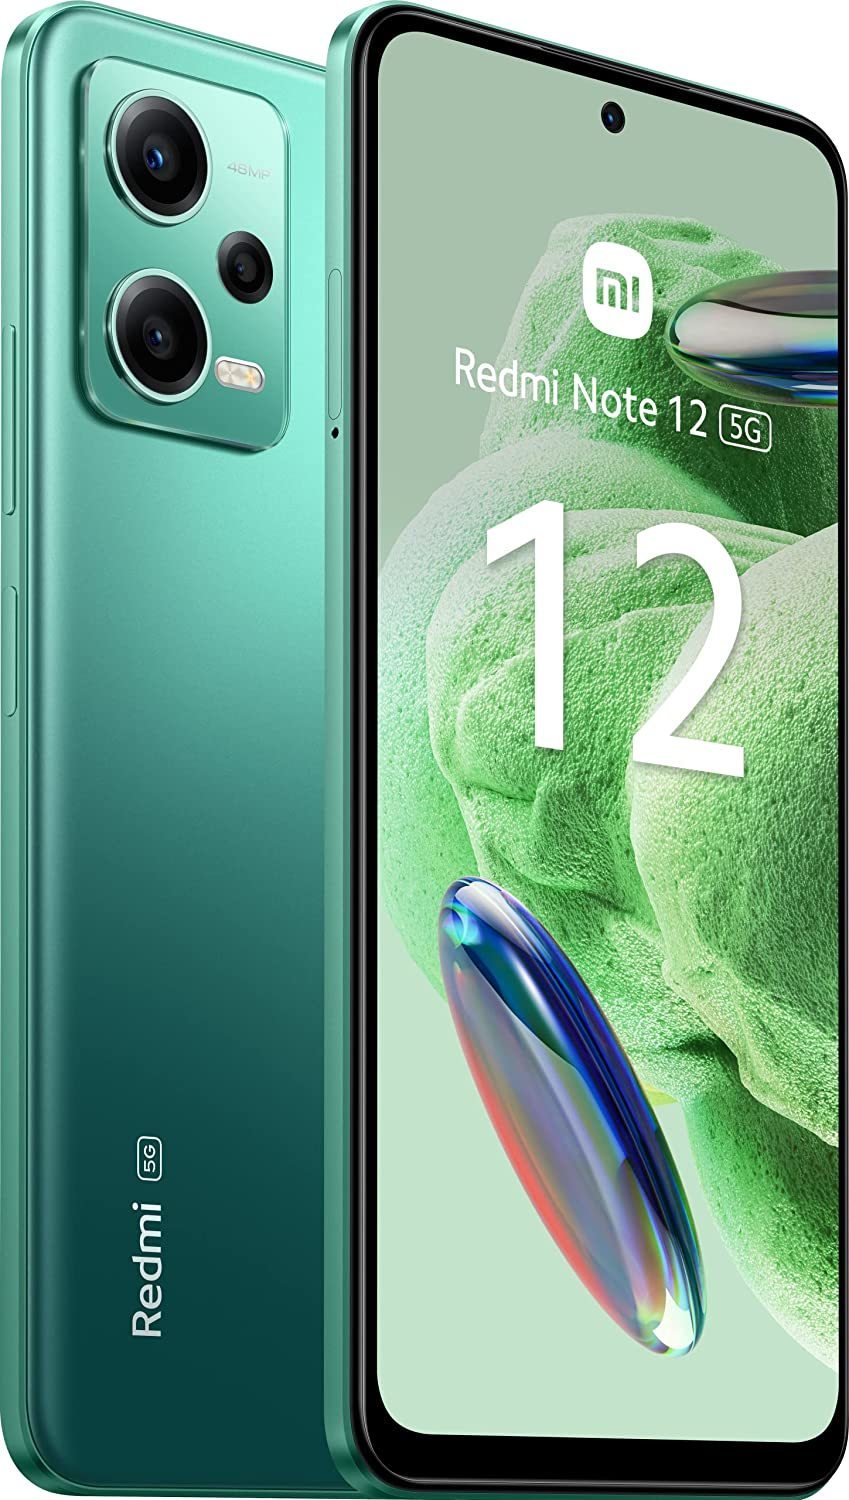 Image of Redmi Note 12 5G smartphone